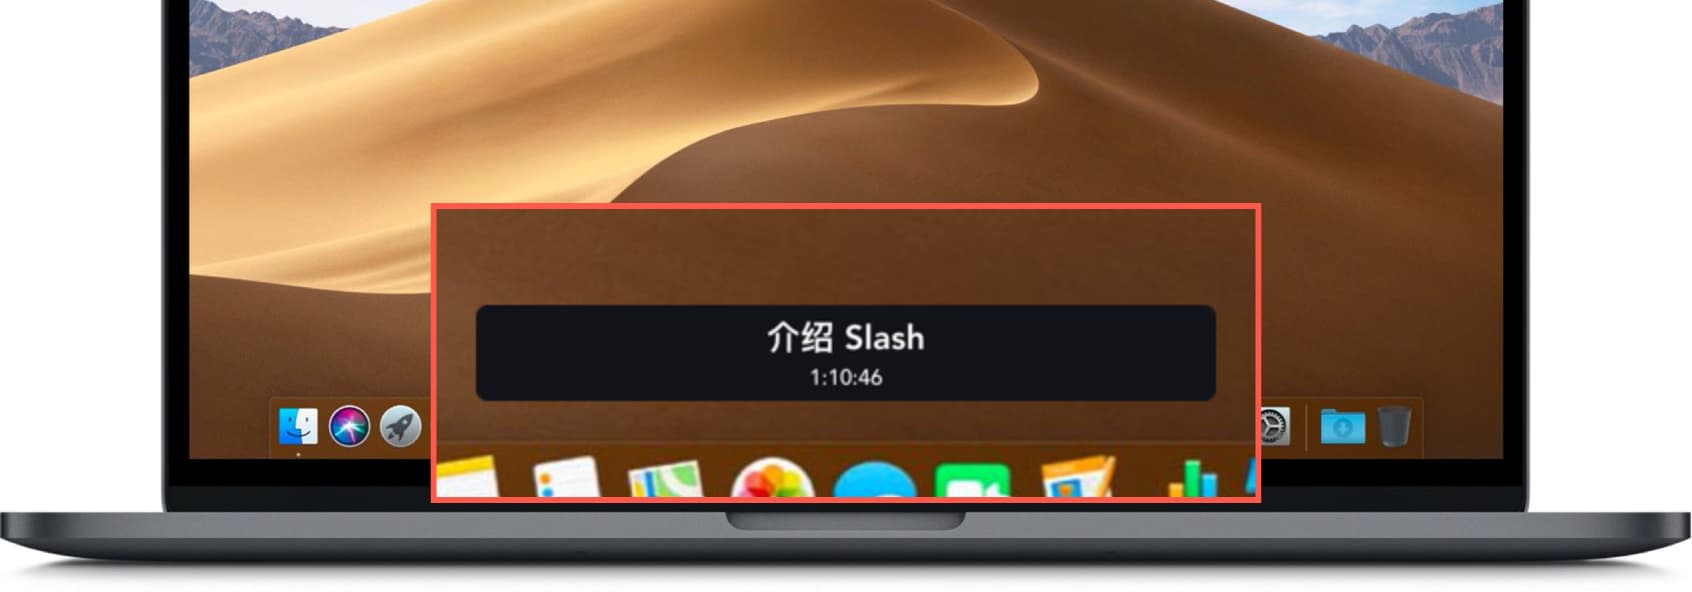 Slash - 为任务计时、提醒，让你更新专心、高效的任务管理工具[macOS] 6